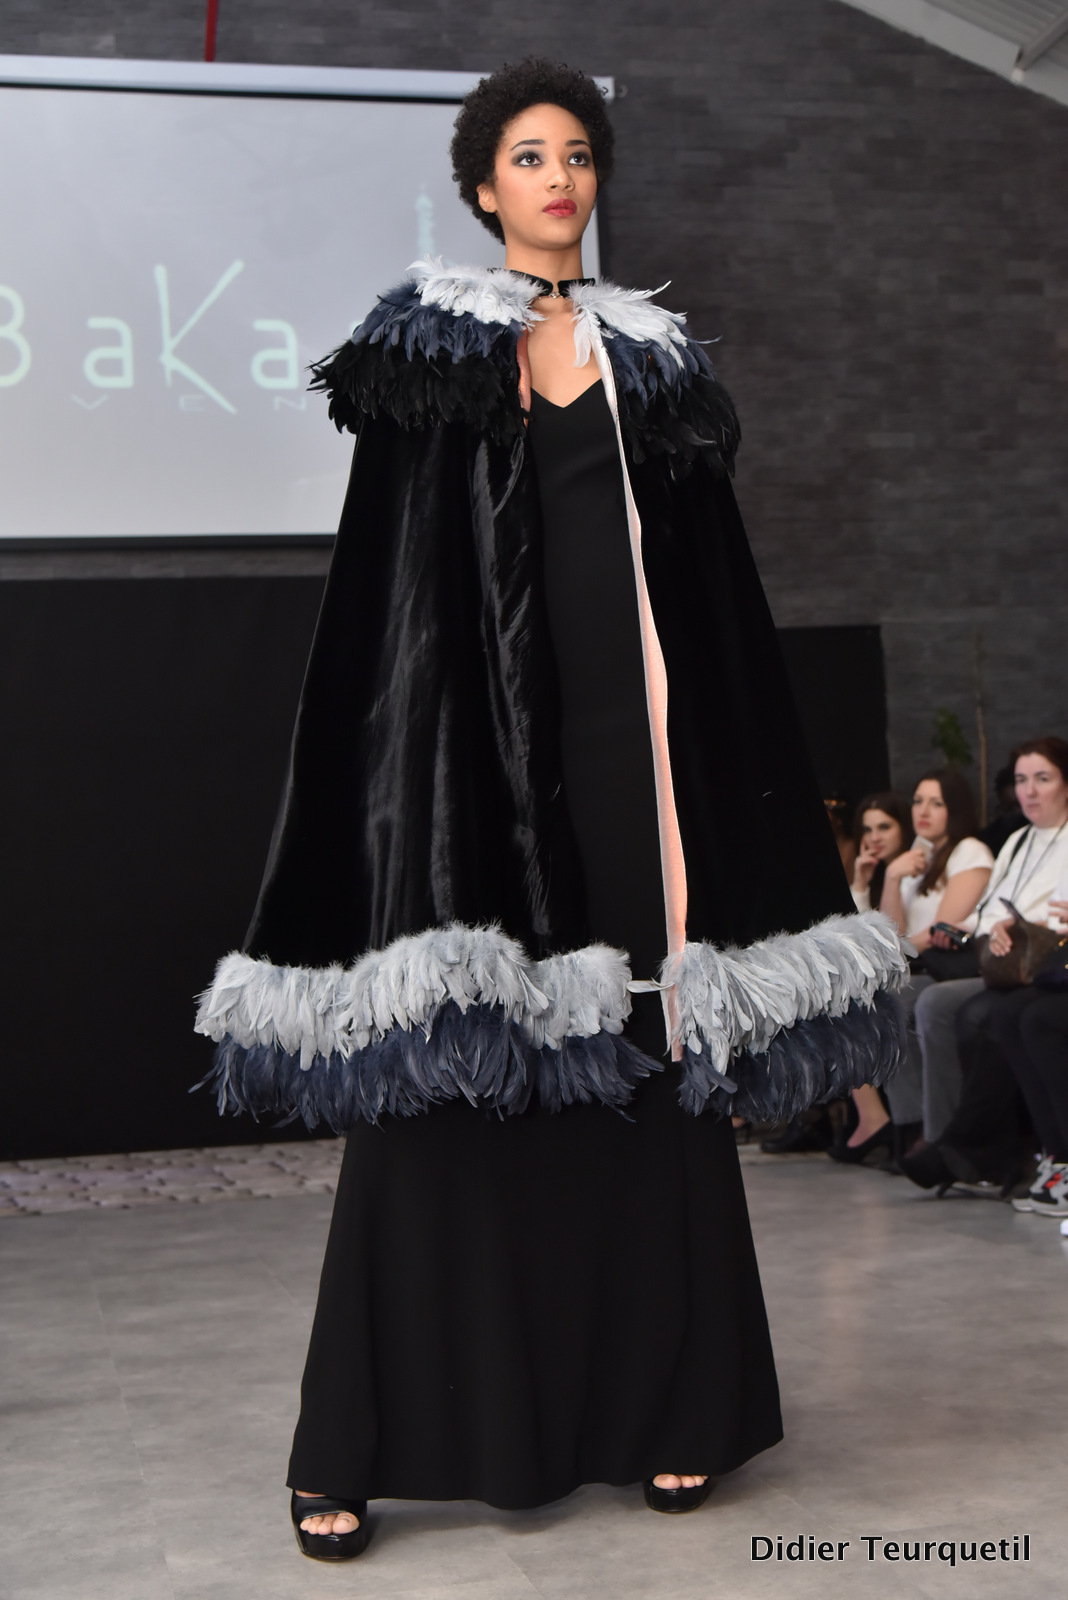 Sneak Peek From Paris Haute Couture, The Arising Star Designer Kate Bee